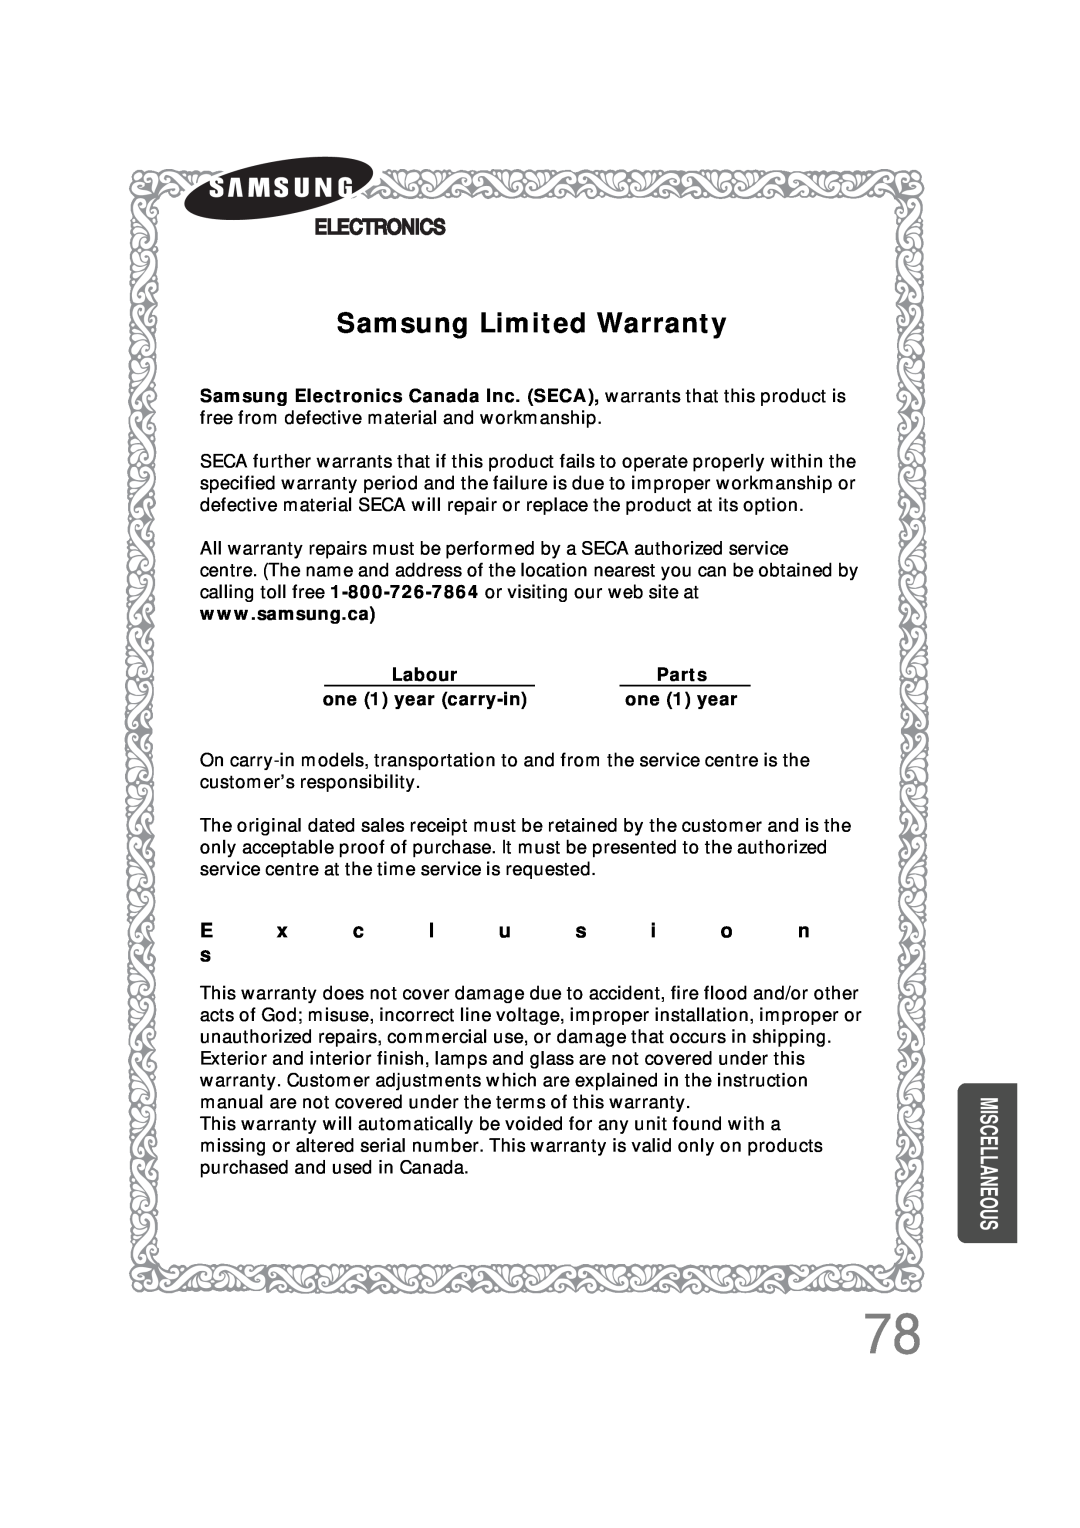 Samsung 20051111103302296 instruction manual Samsung Limited Warranty 